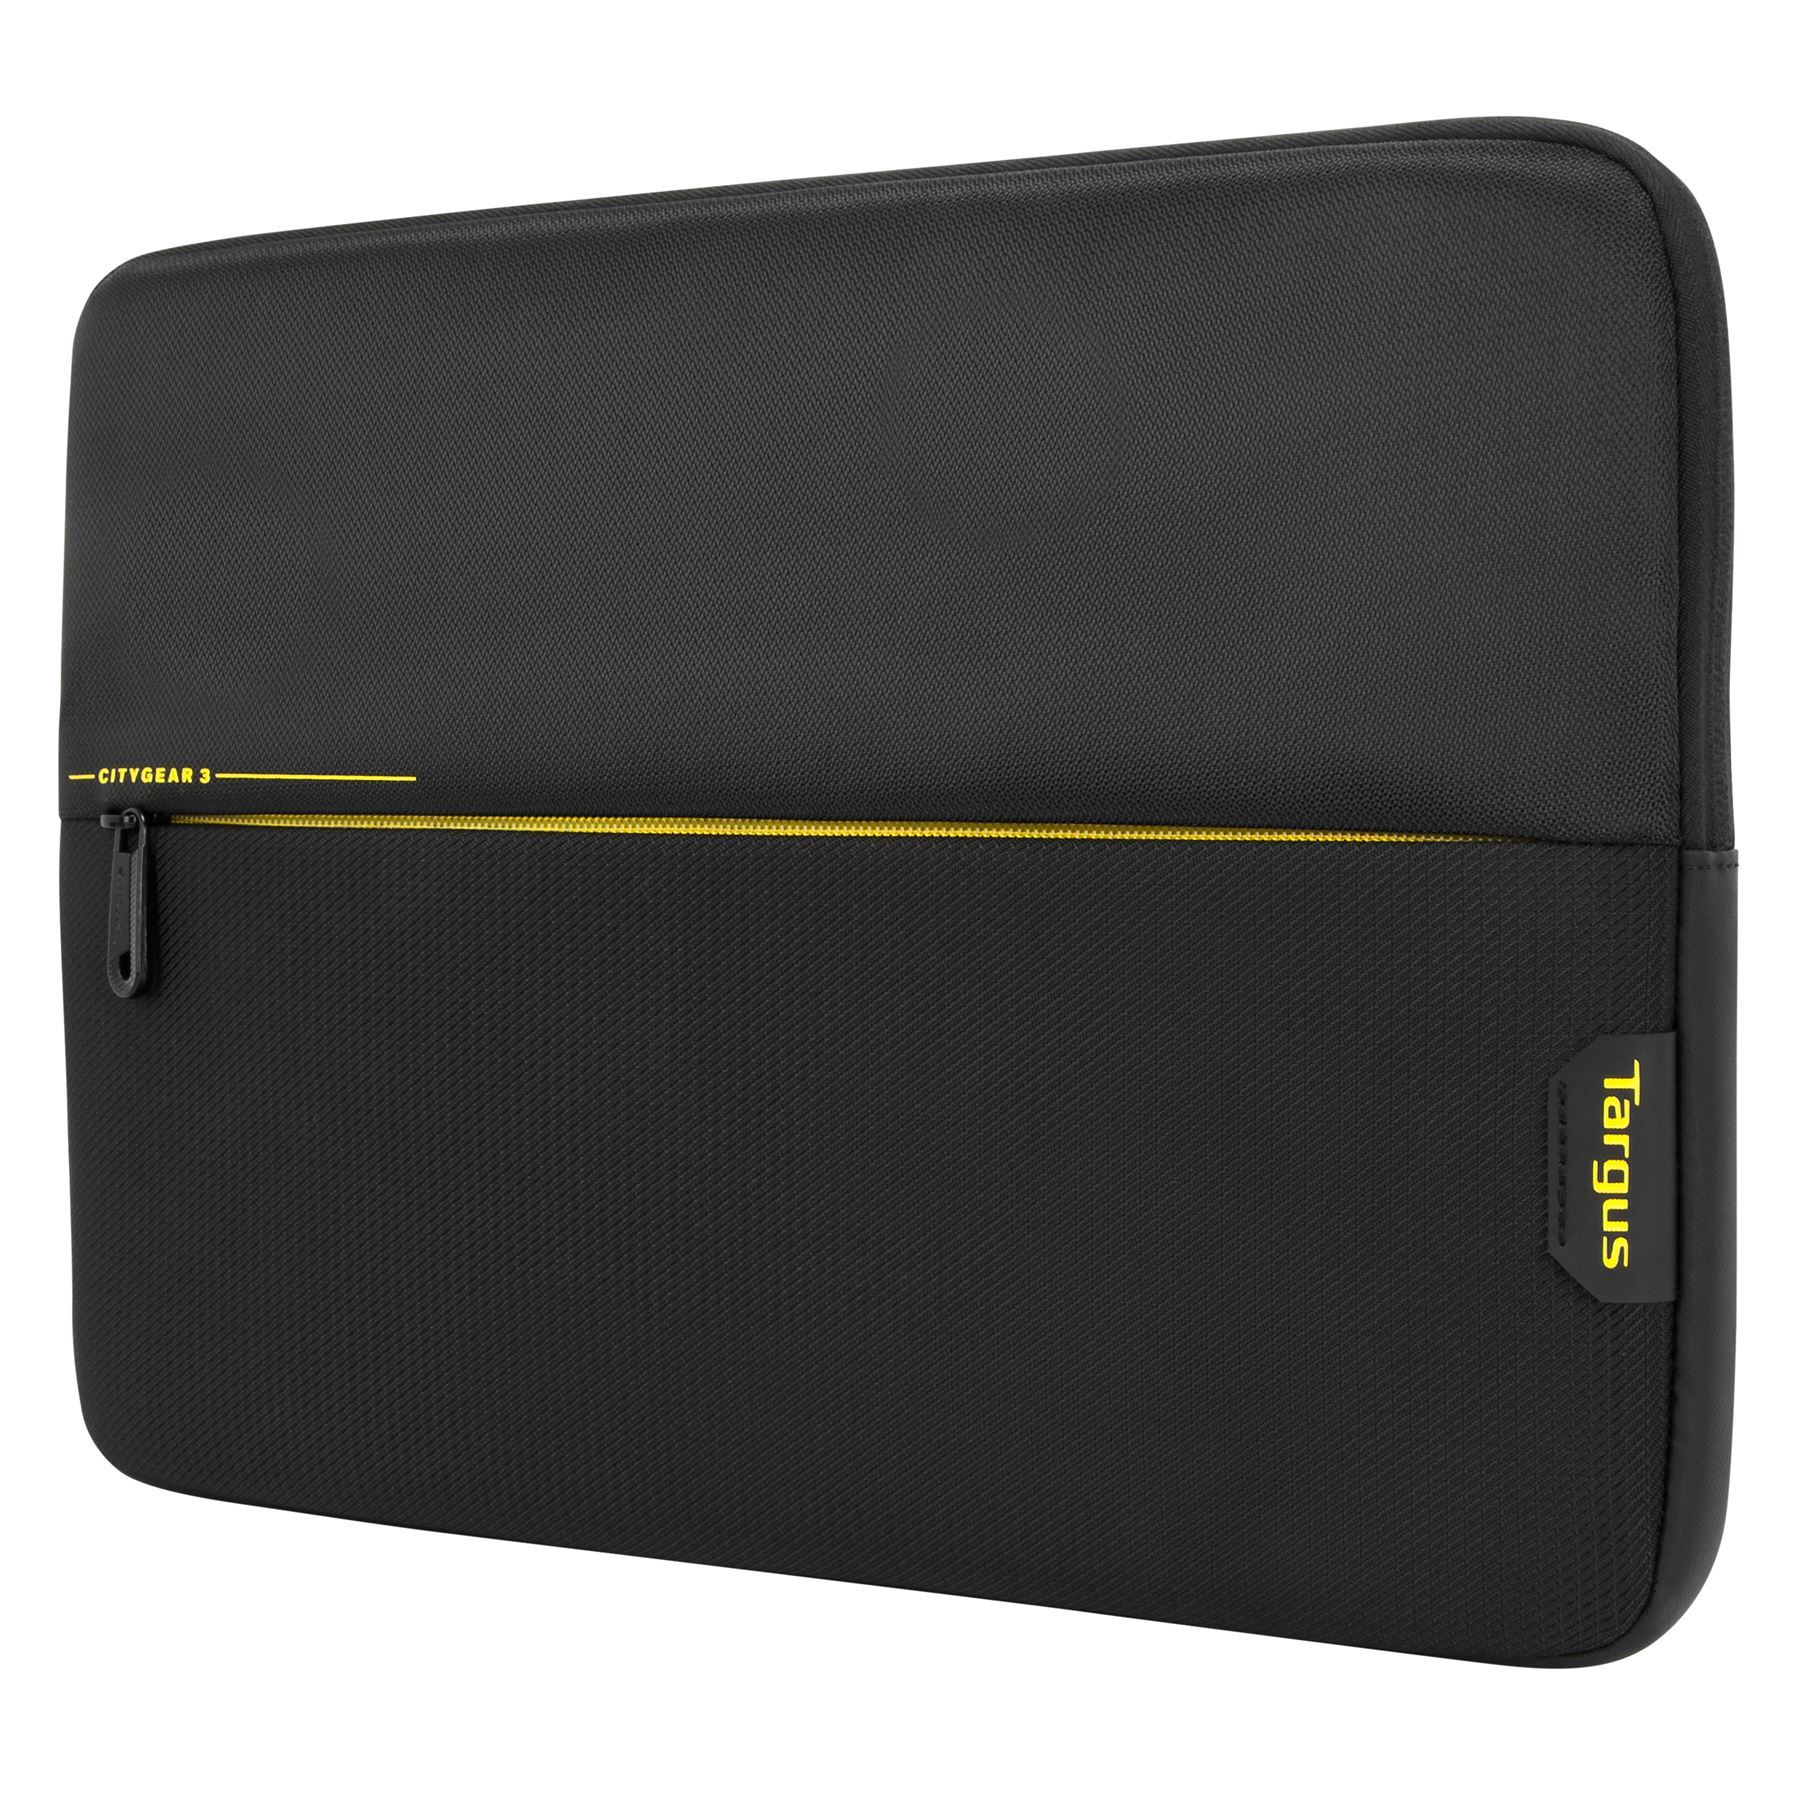 Targus CityGear 3 39.6 cm (15.6") Sleeve case Black, Yellow - TSS994GL